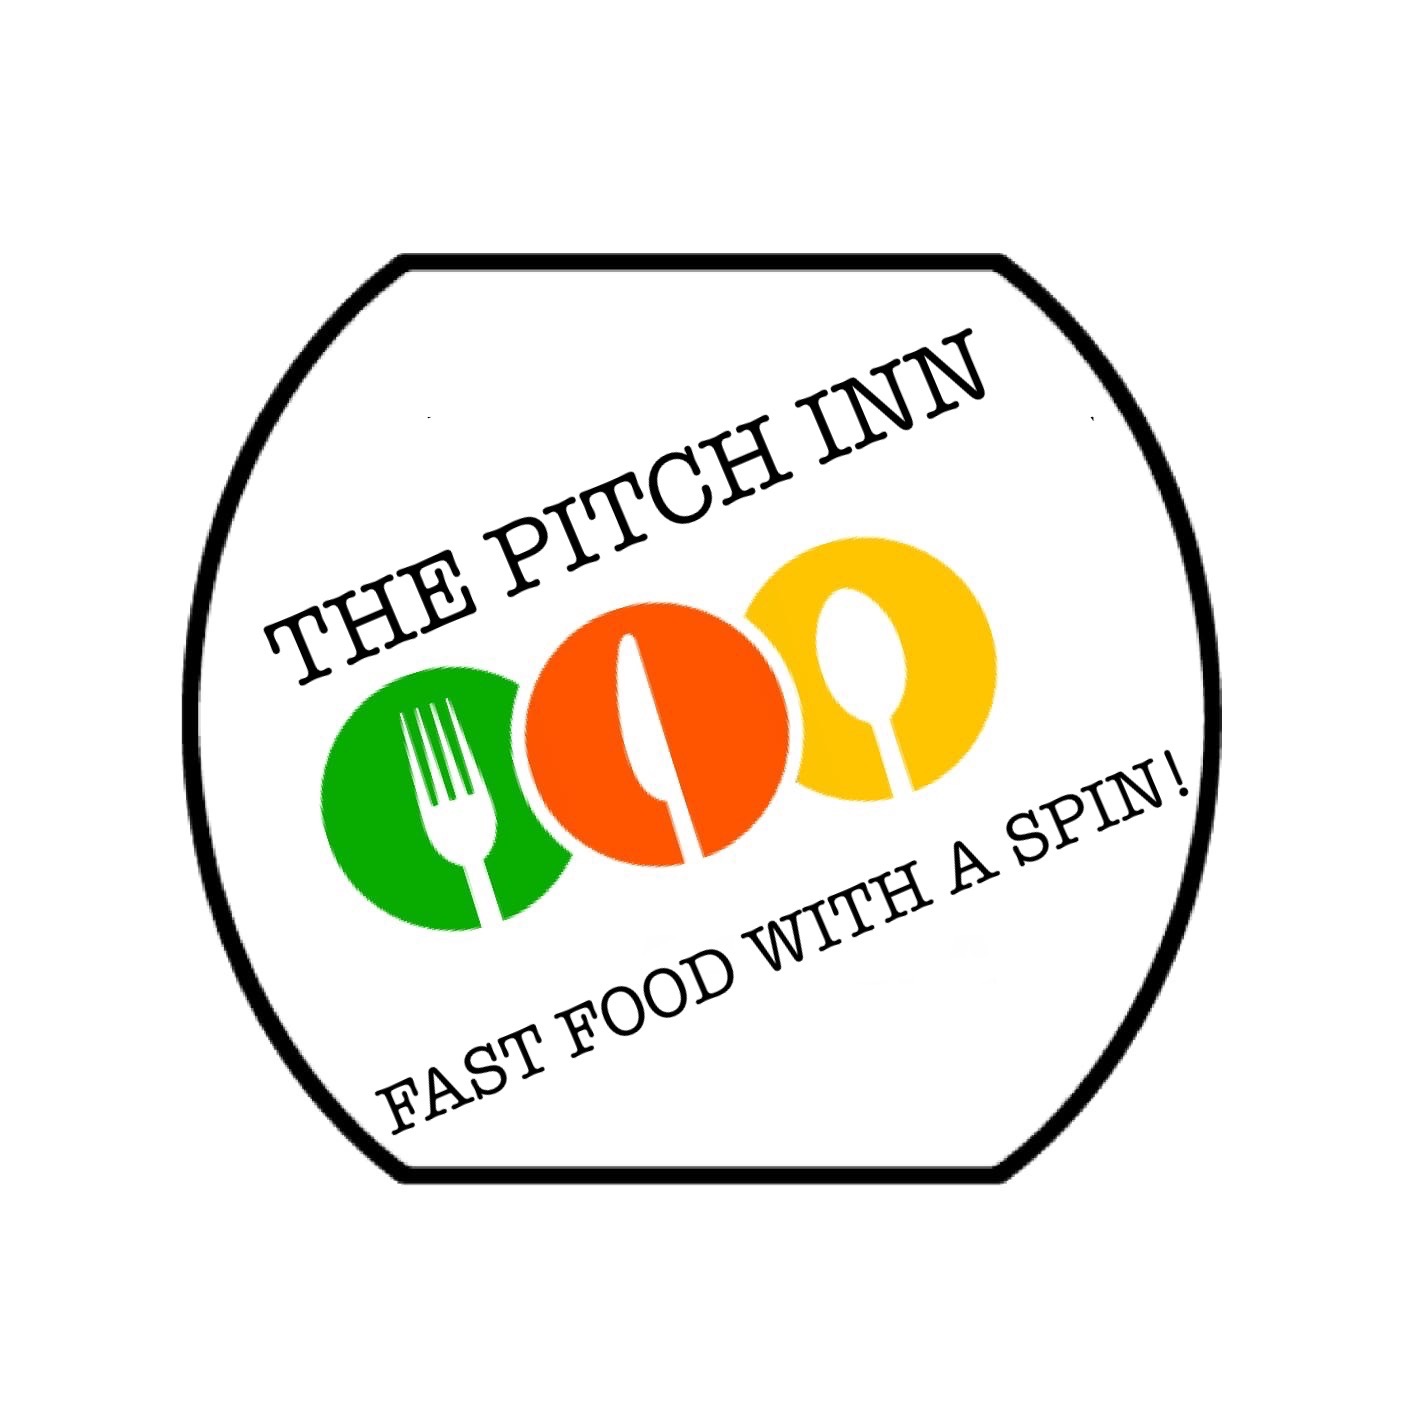 The Pitch Inn